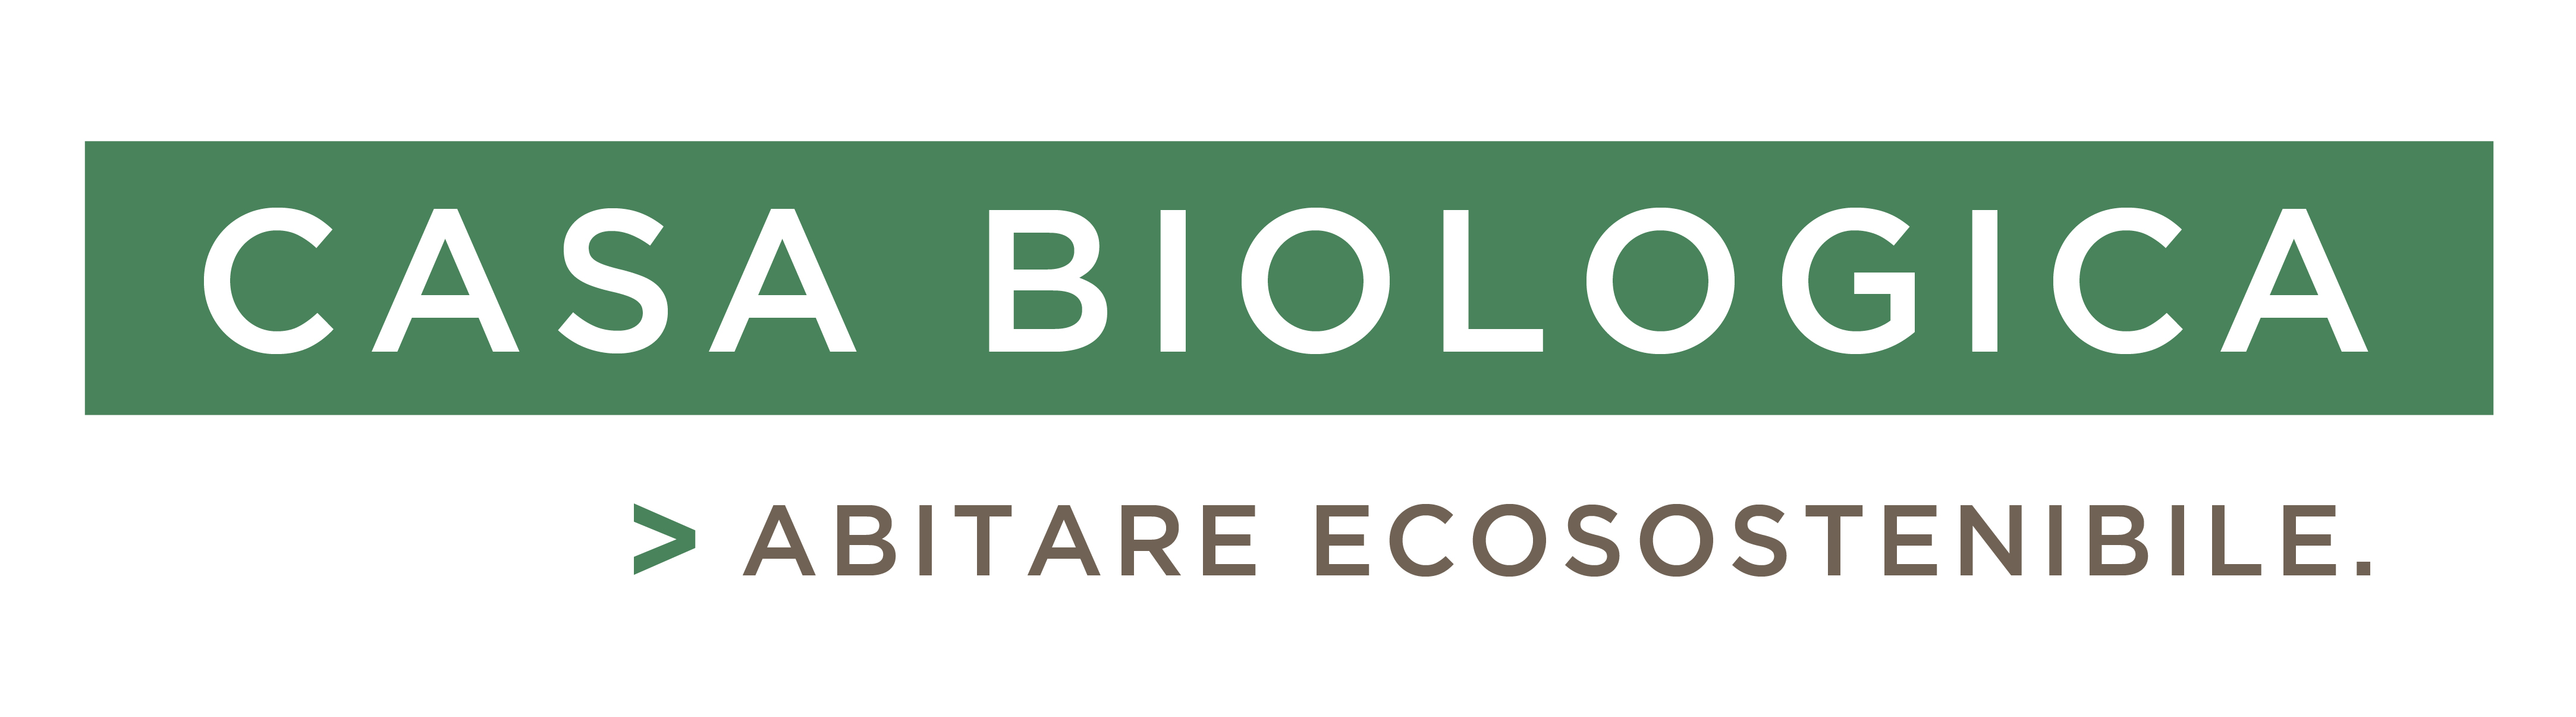 CasaBiologica_Logo